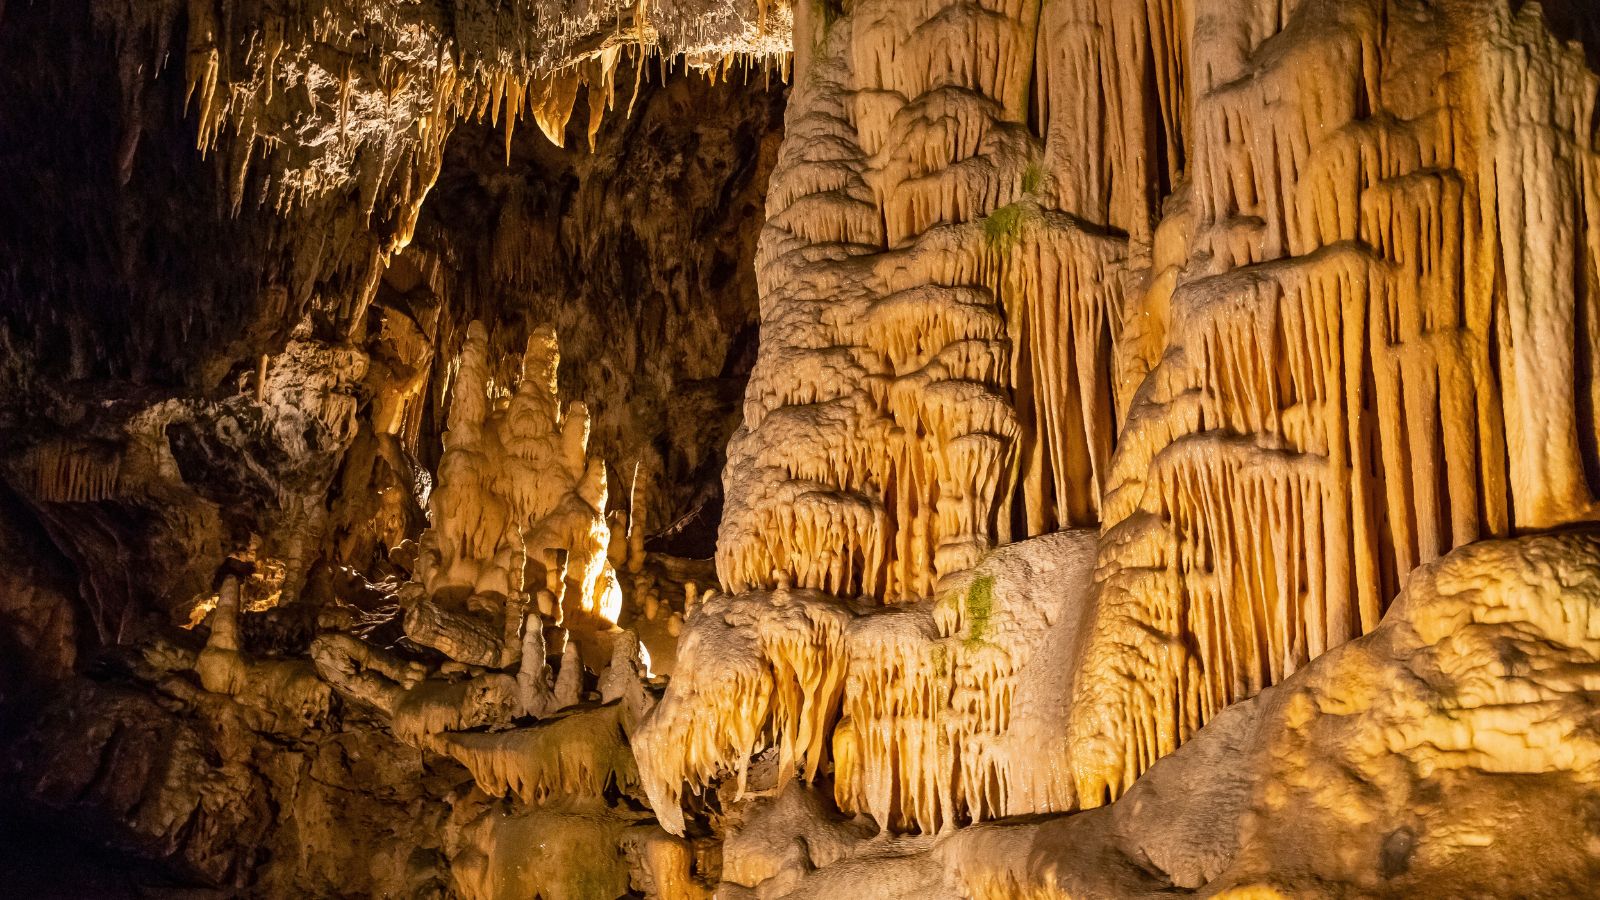 Inside Sung Sot Cave Halong Bay